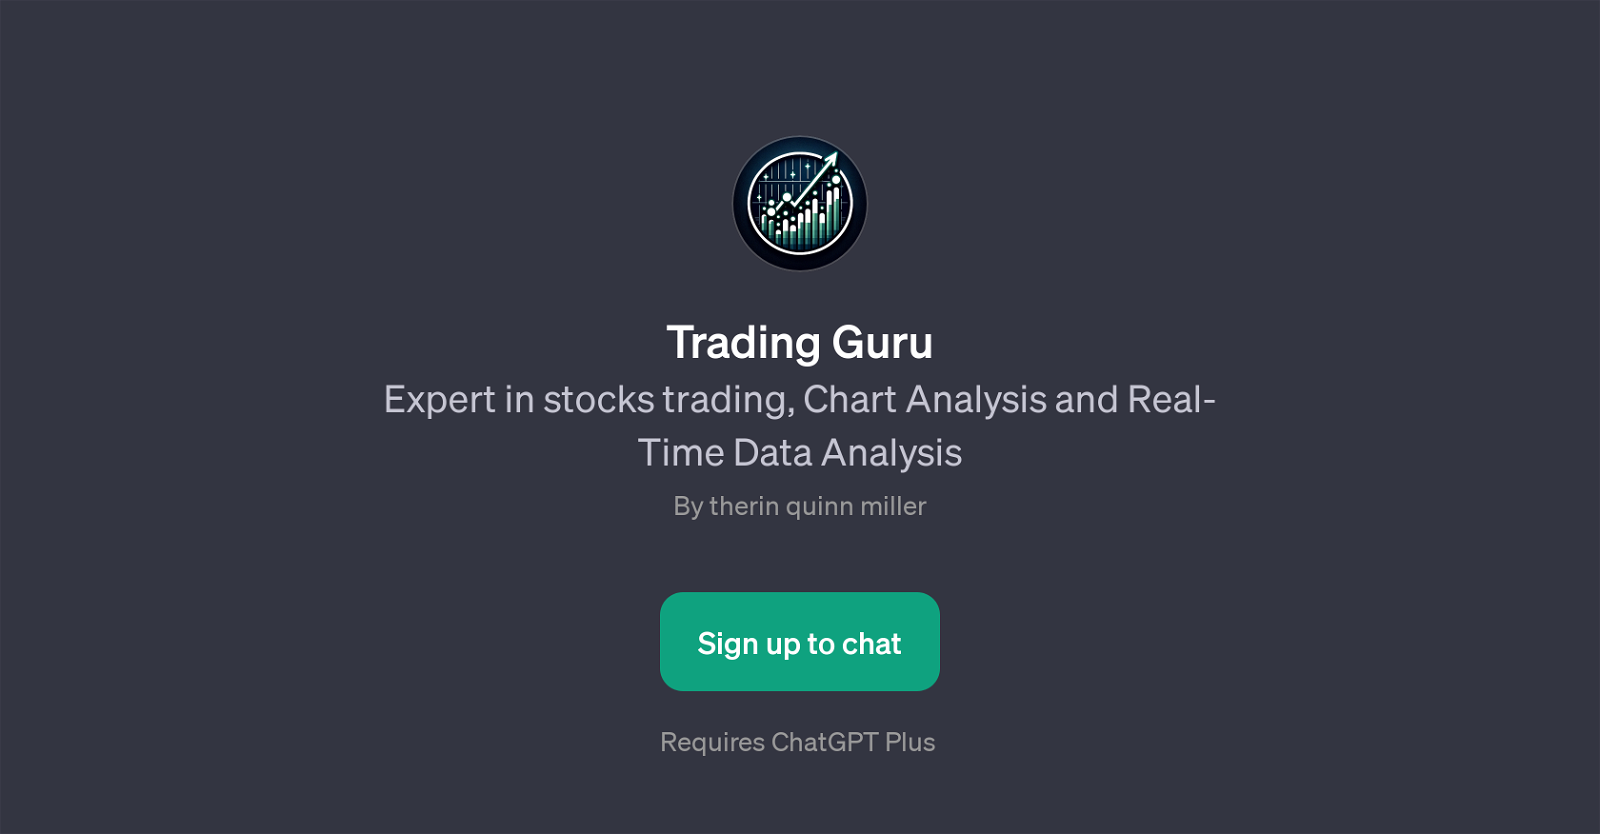 Trading Guru website